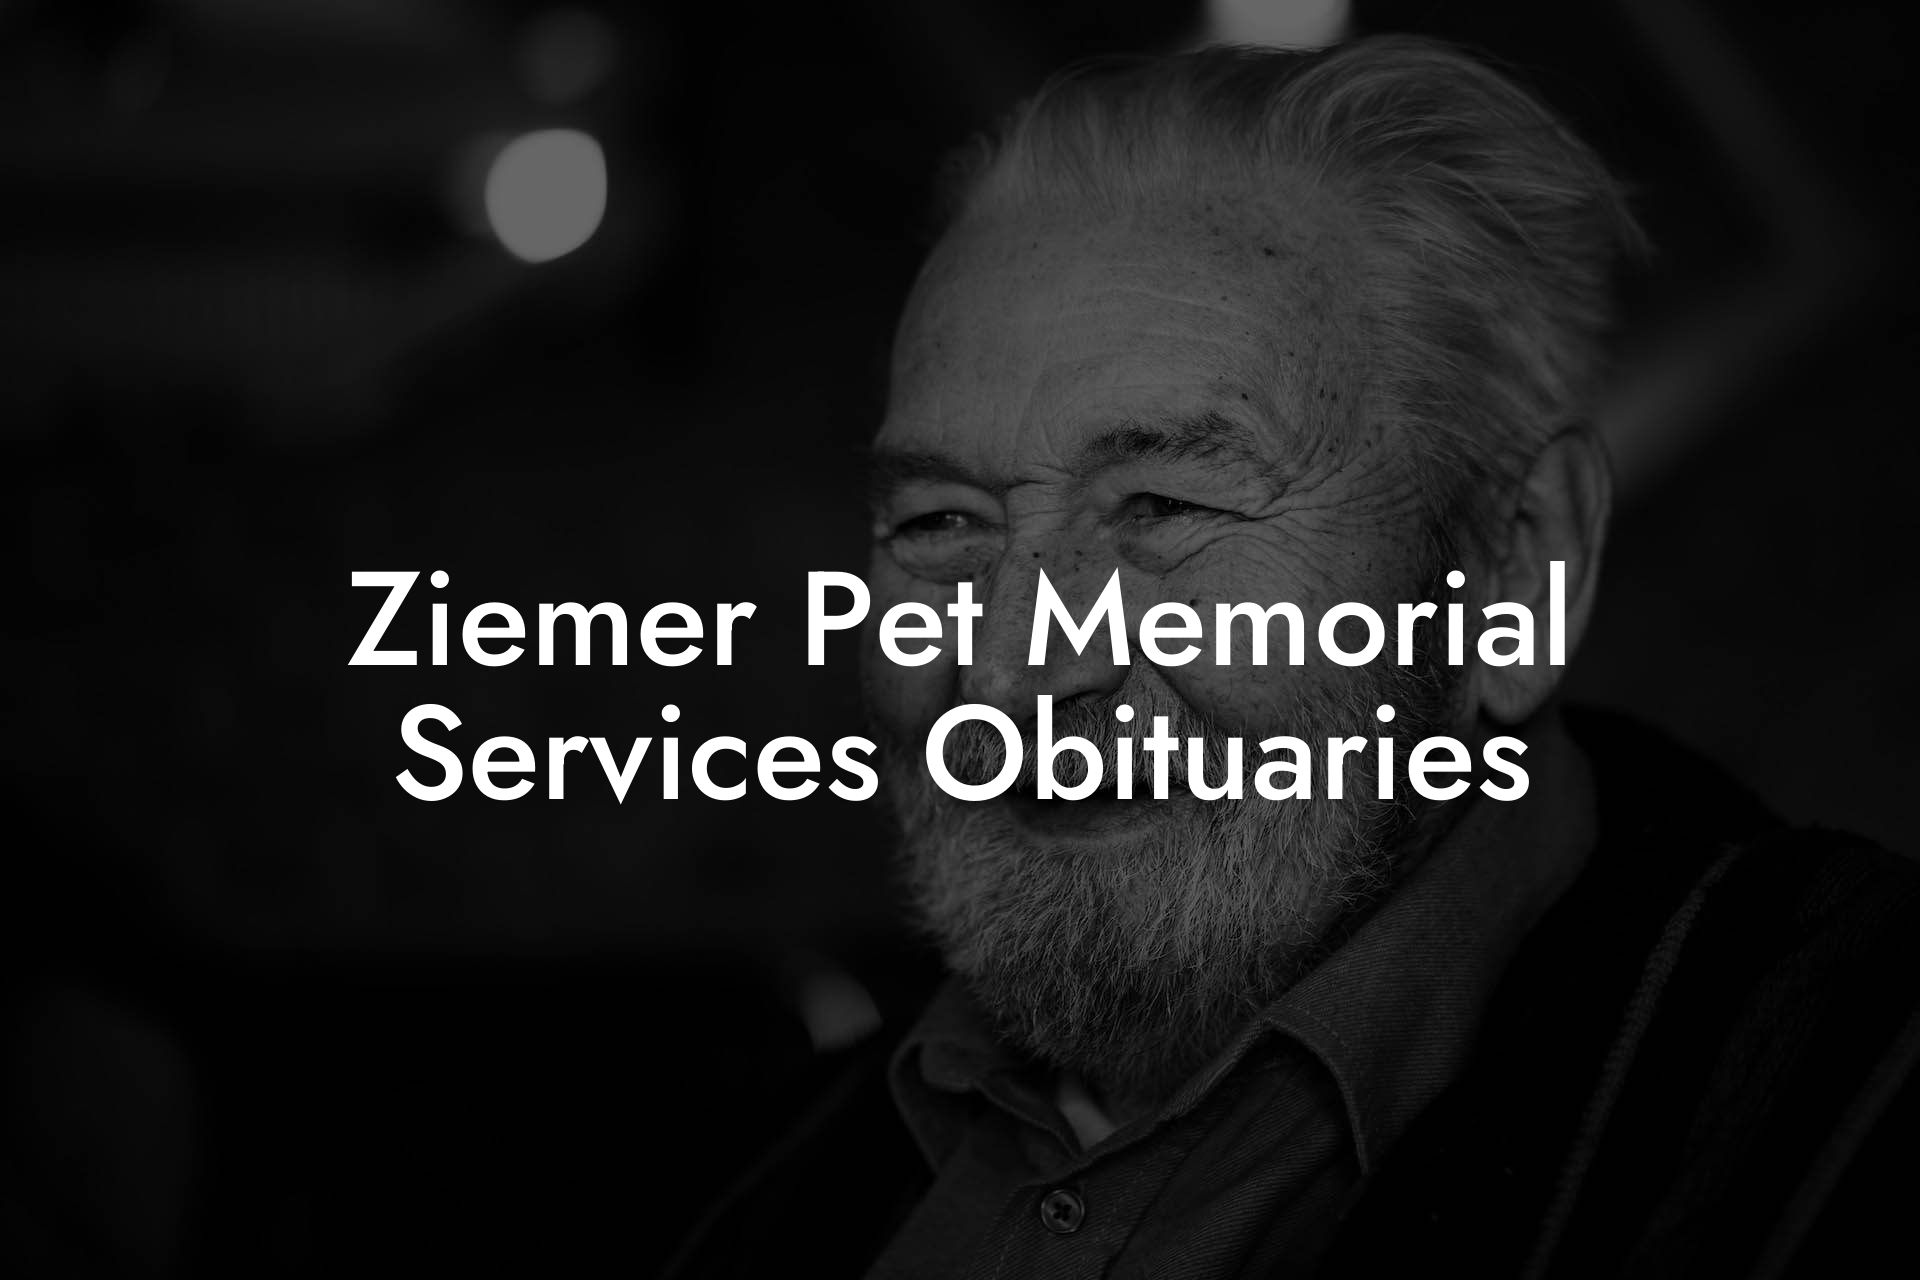 Ziemer Pet Memorial Services Obituaries